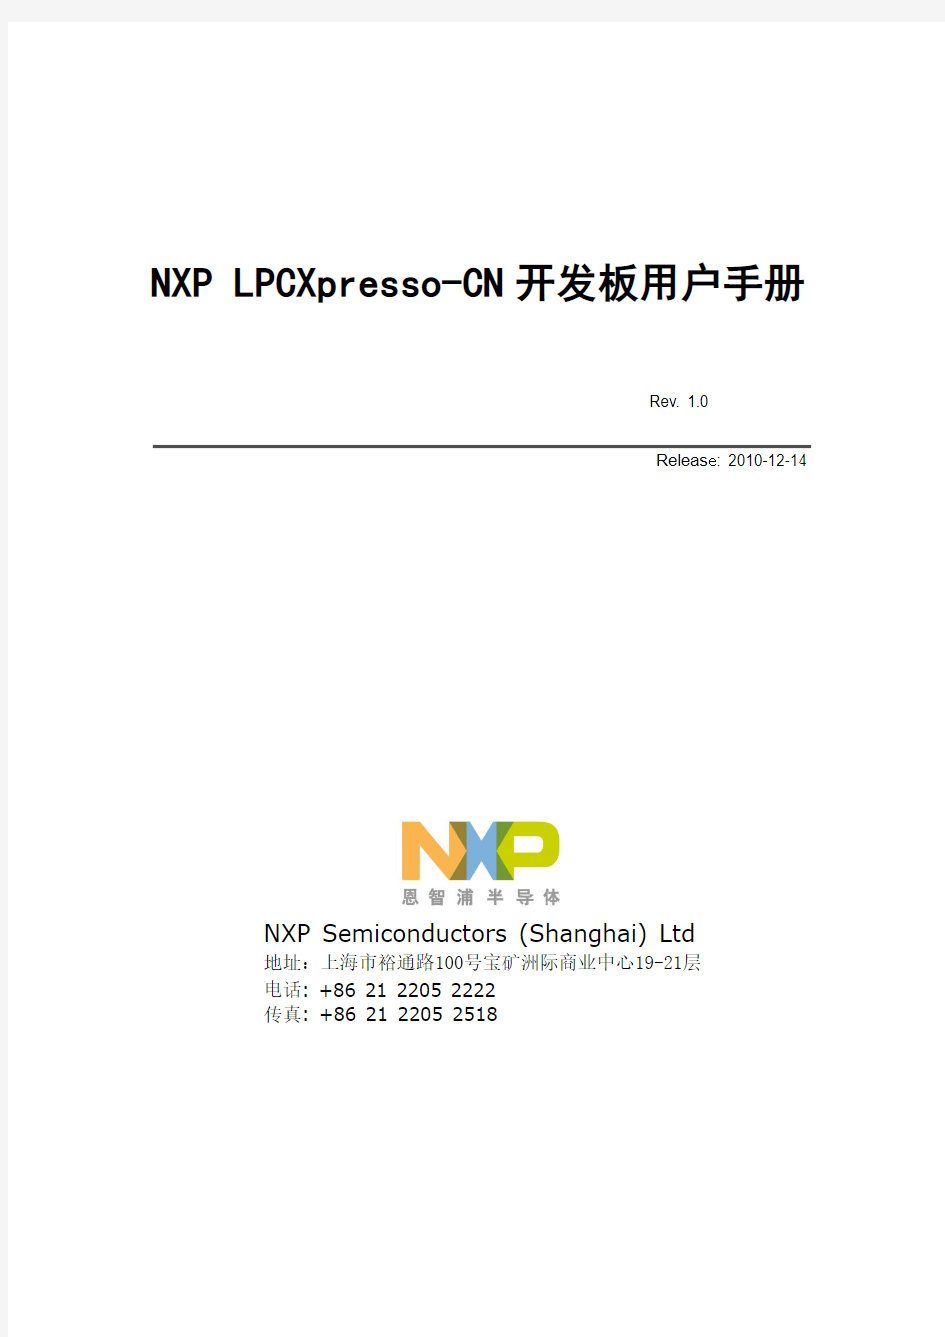 NXP LPCXpresso-CN用户手册V1.0